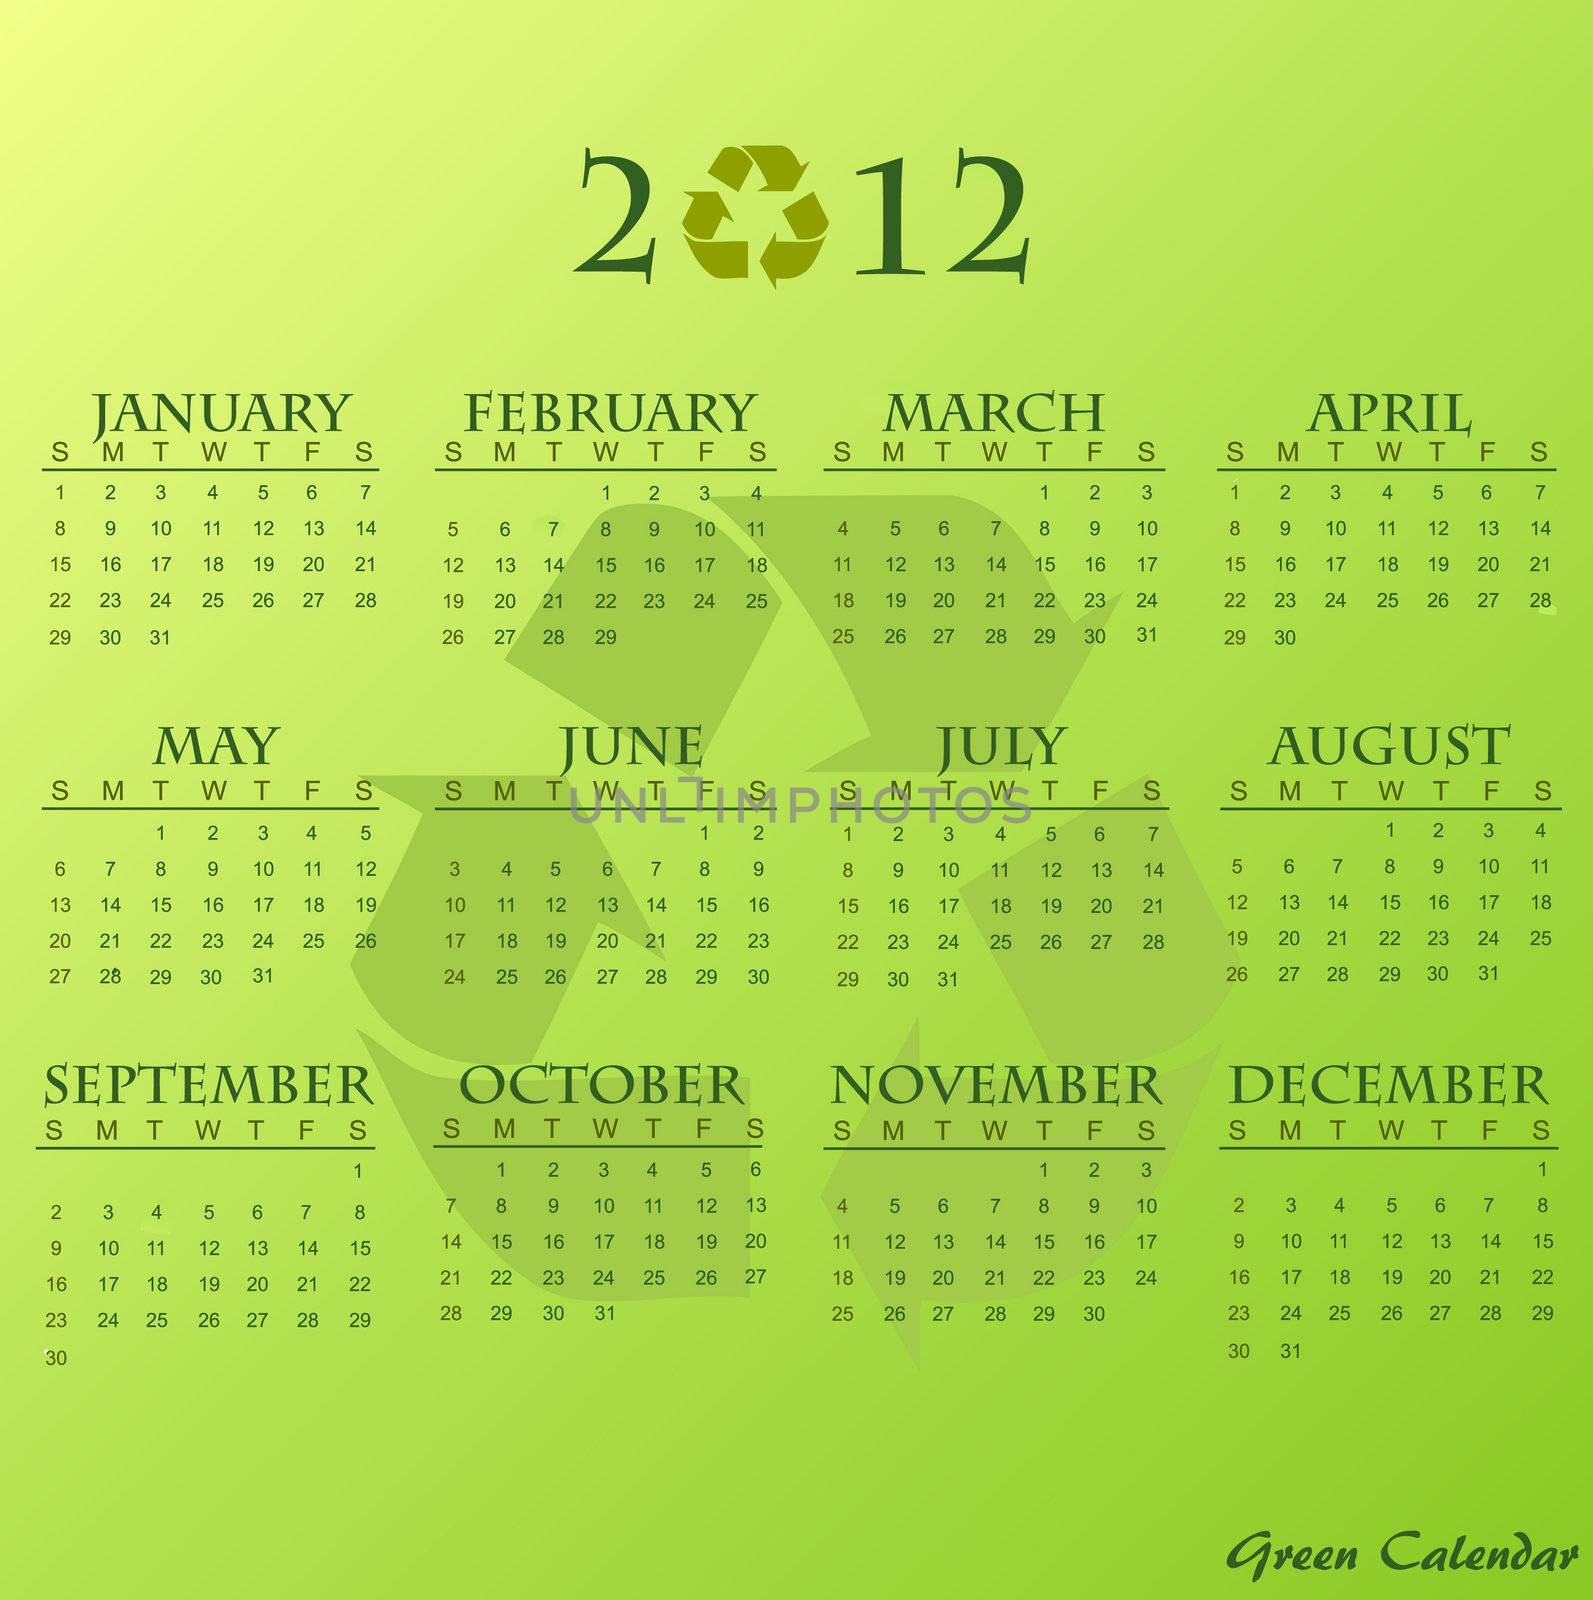 Image of a 2012 green calendar.